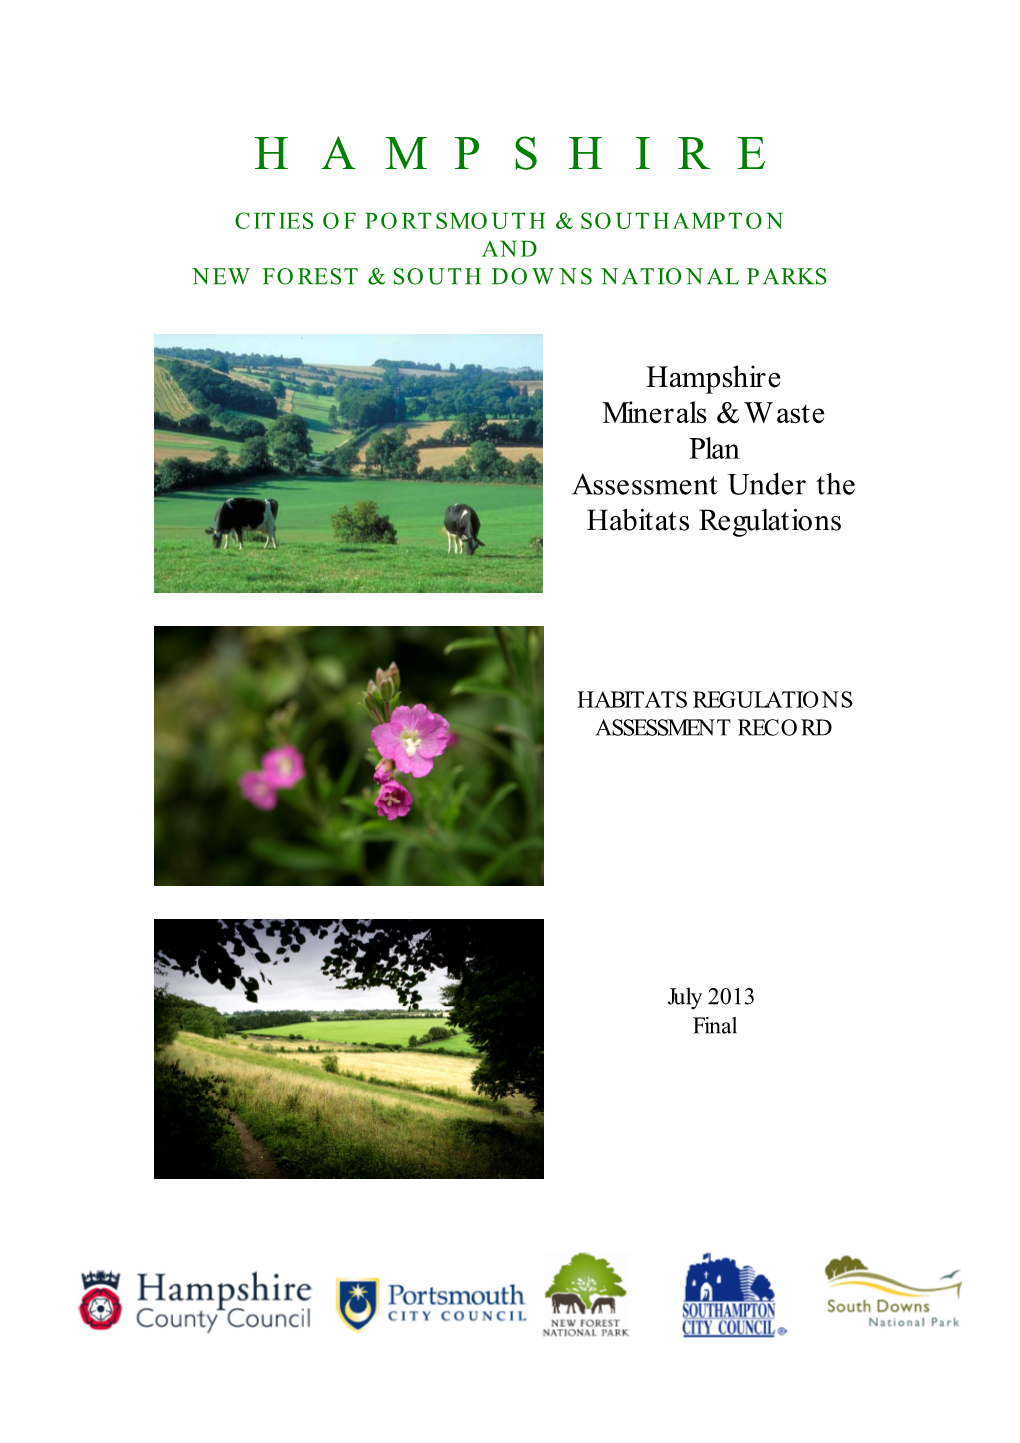 Habitats Regulations Assessment Record Appendices (FINAL) Sept 2013